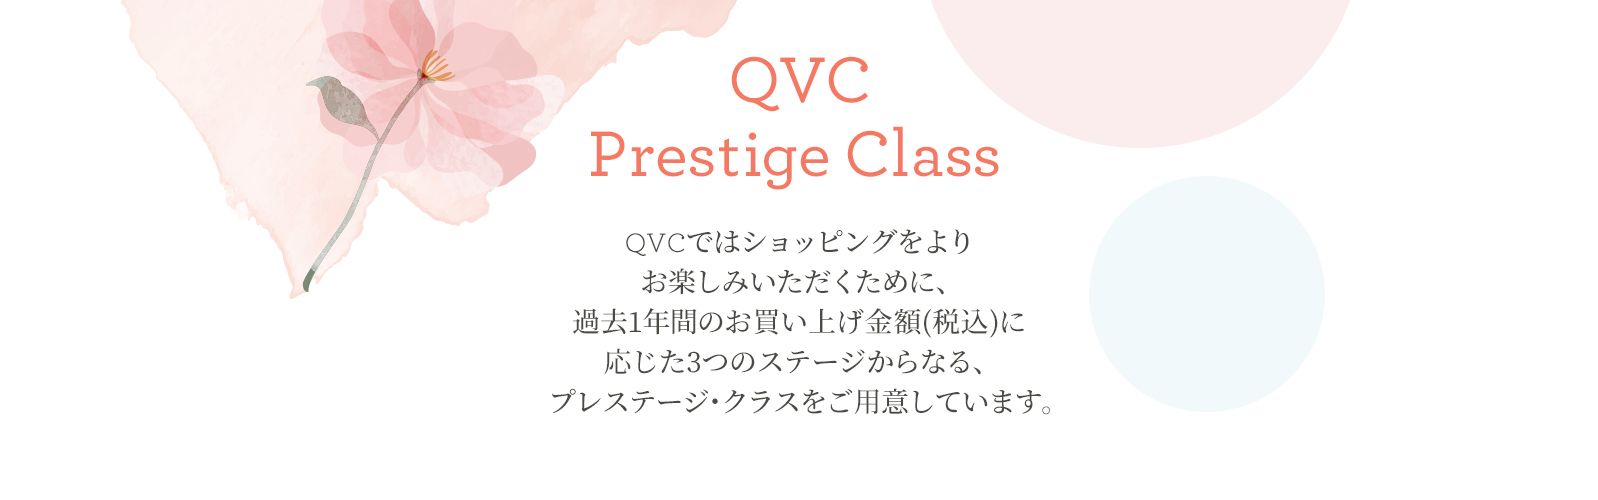 QVC Prestige Classについて